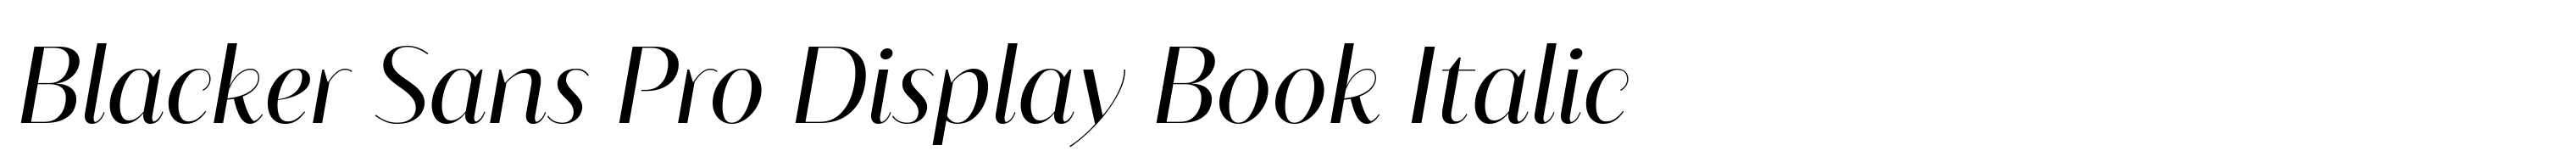 Blacker Sans Pro Display Book Italic